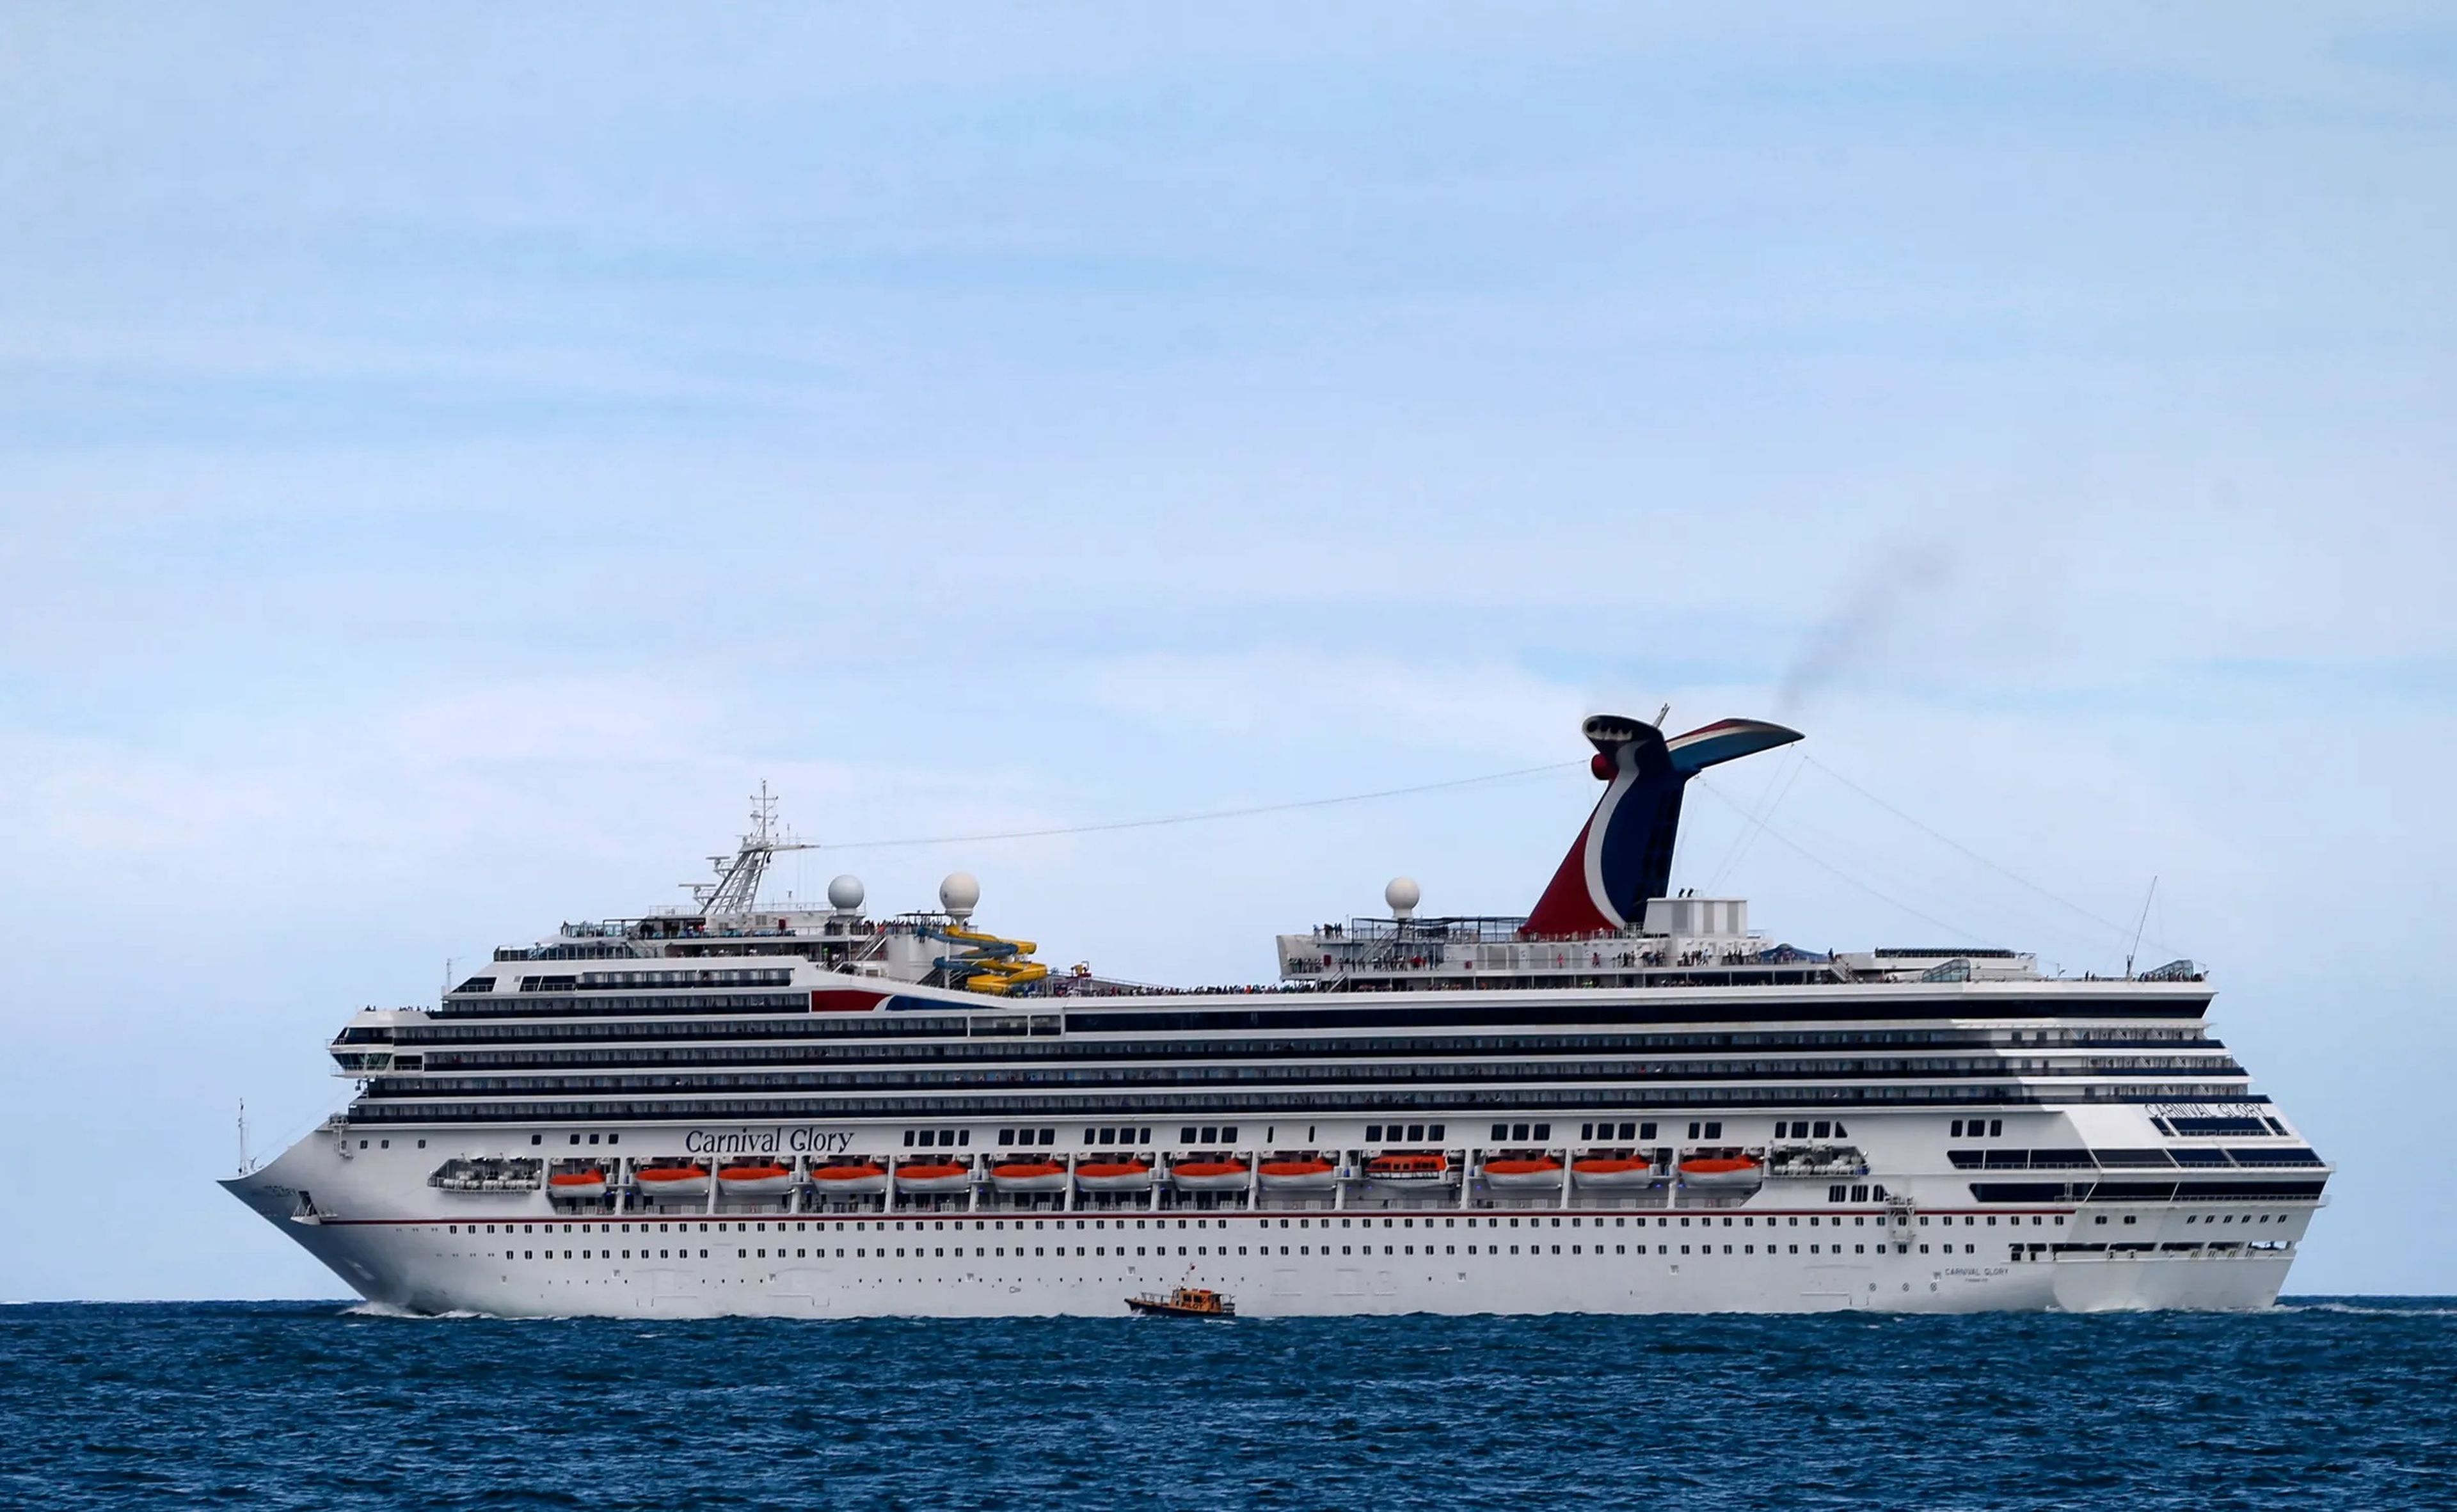 The Carnival Glory cruise ship at sea.